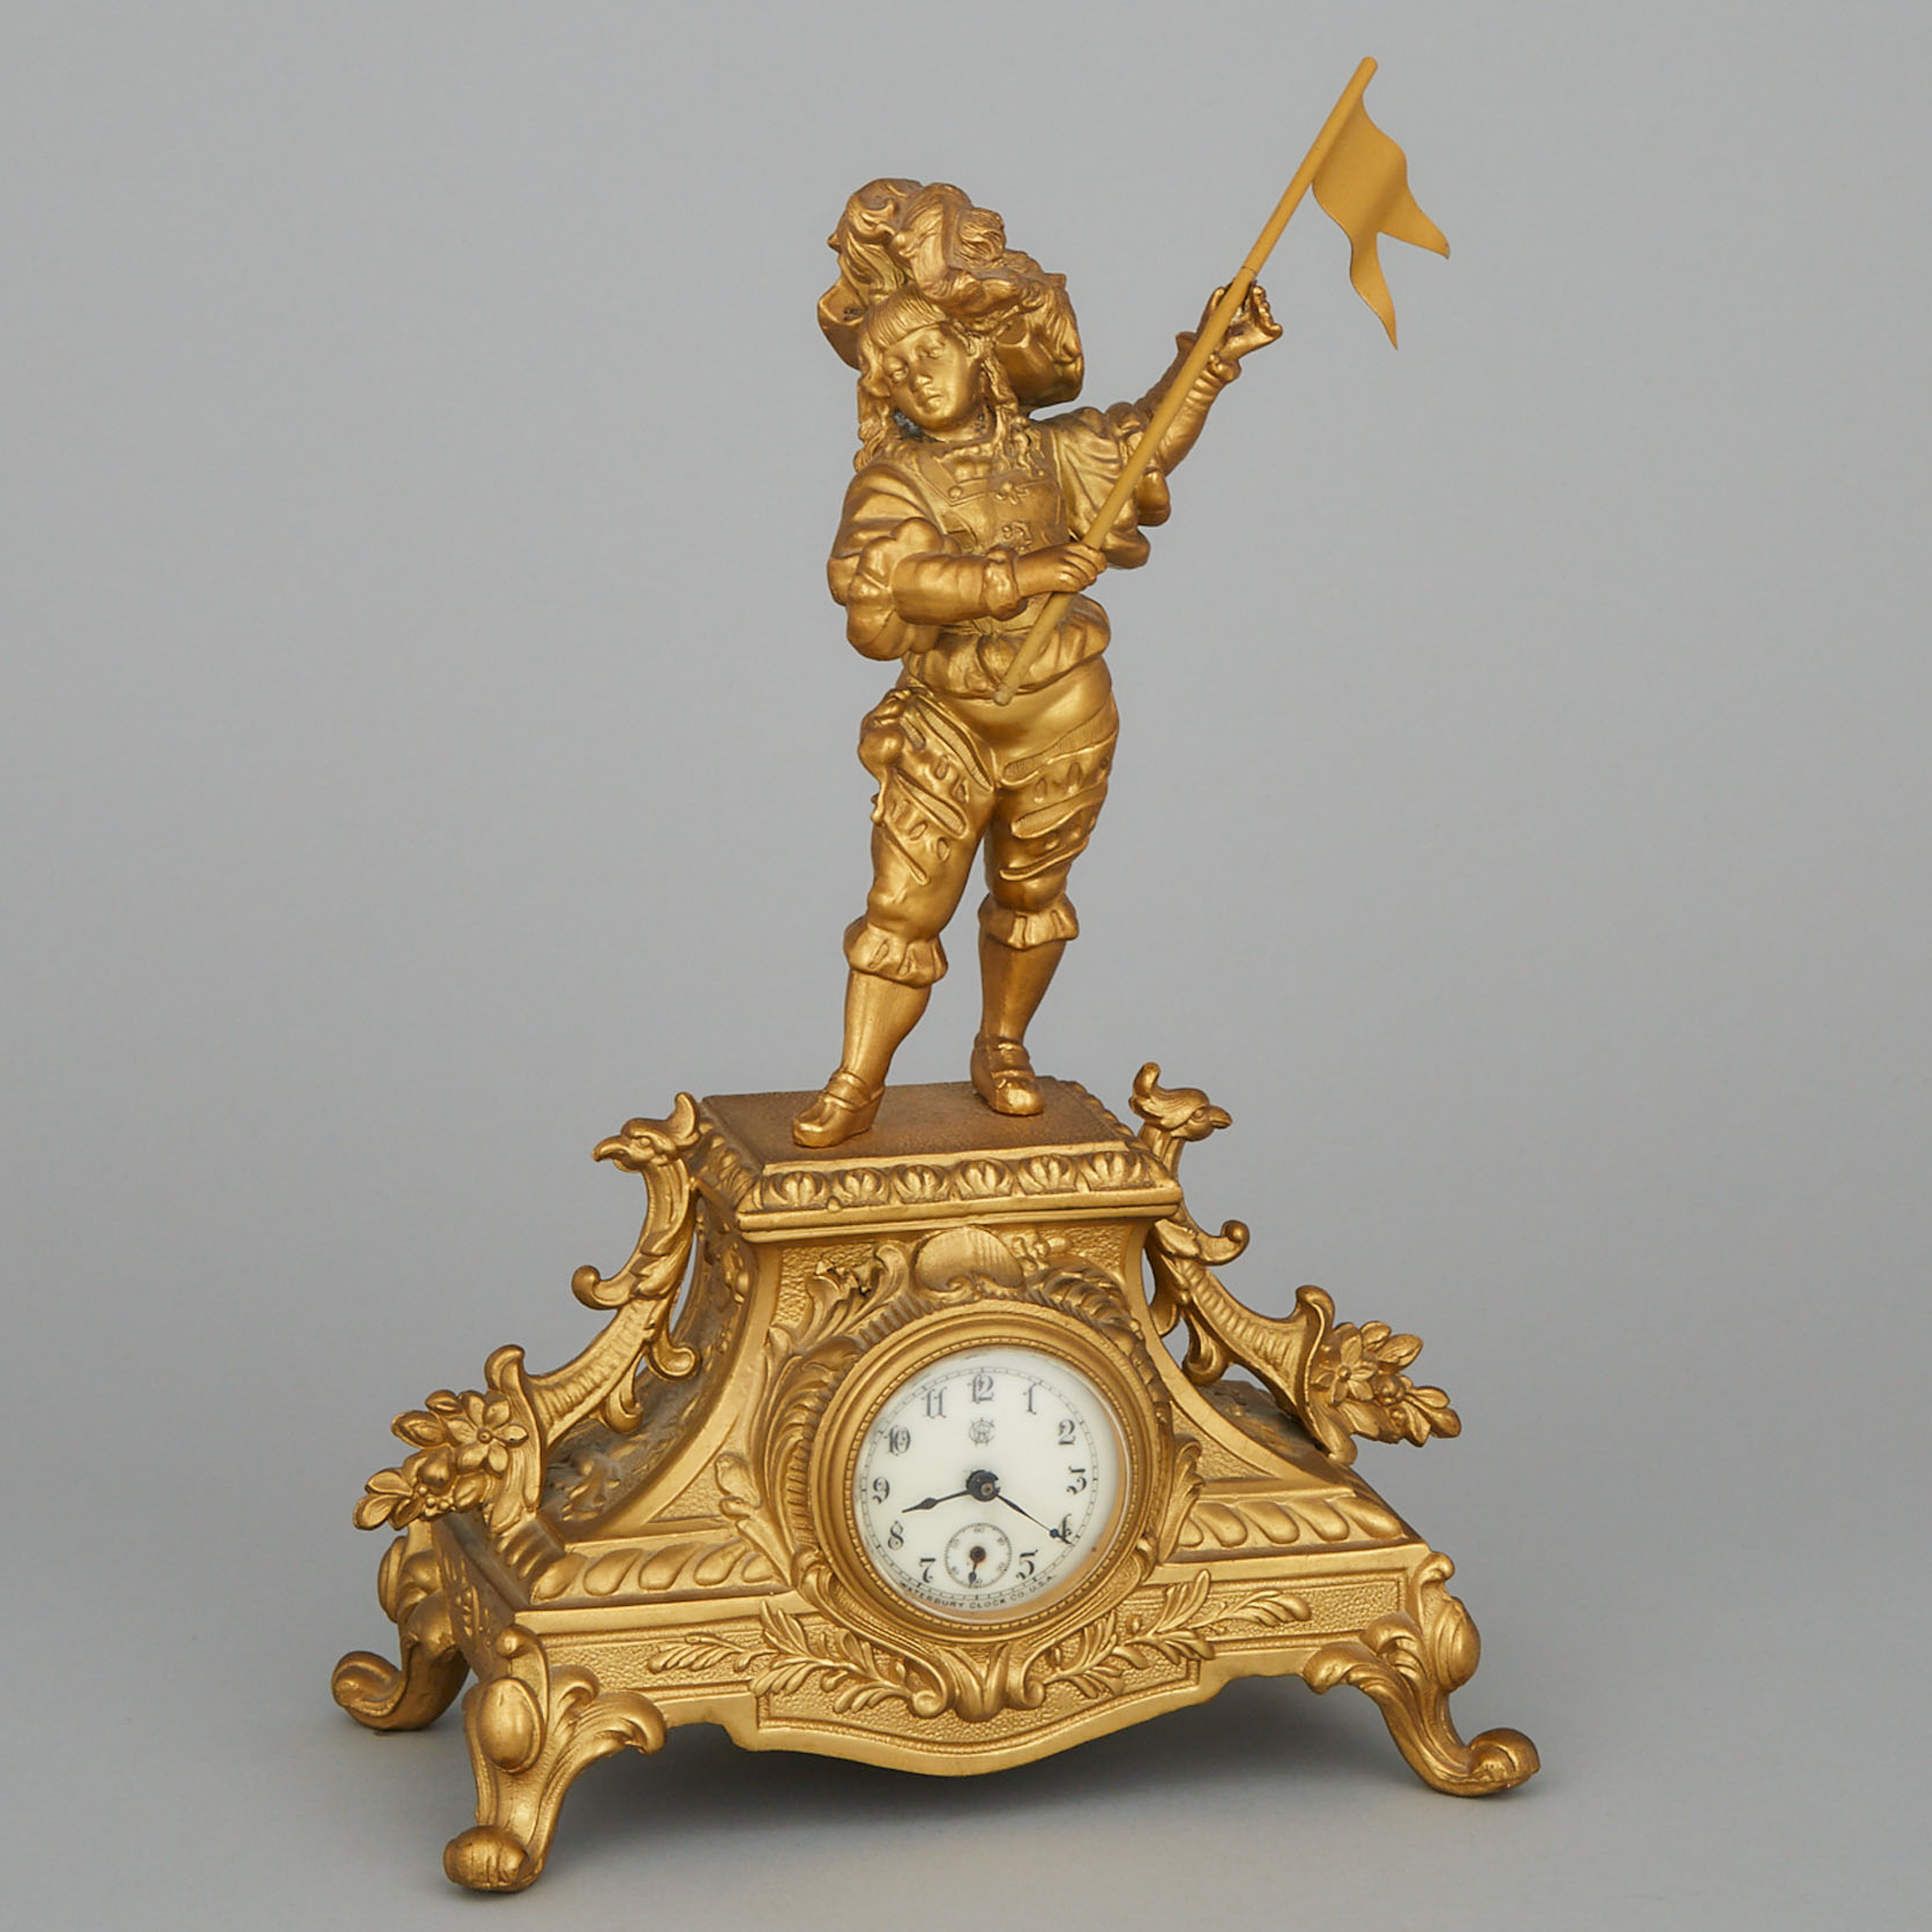 Small American GIlt Metal Figural Desk Clock, Waterbury Clock Co., New York, 19th century`